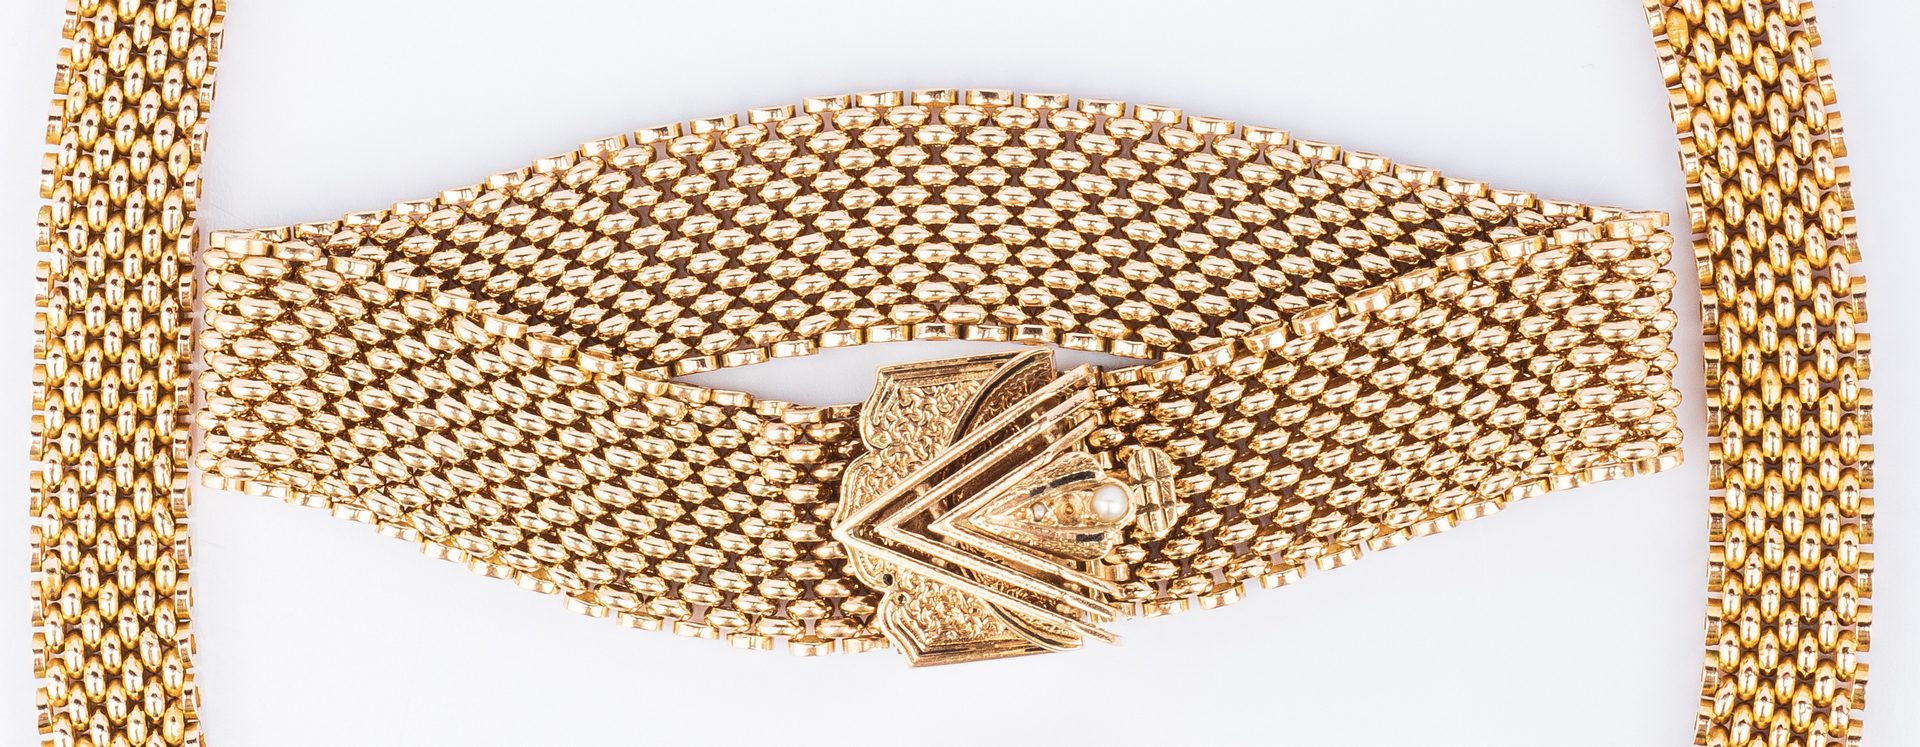 Lot 38: Gold mesh necklace and bracelet, Art Deco style